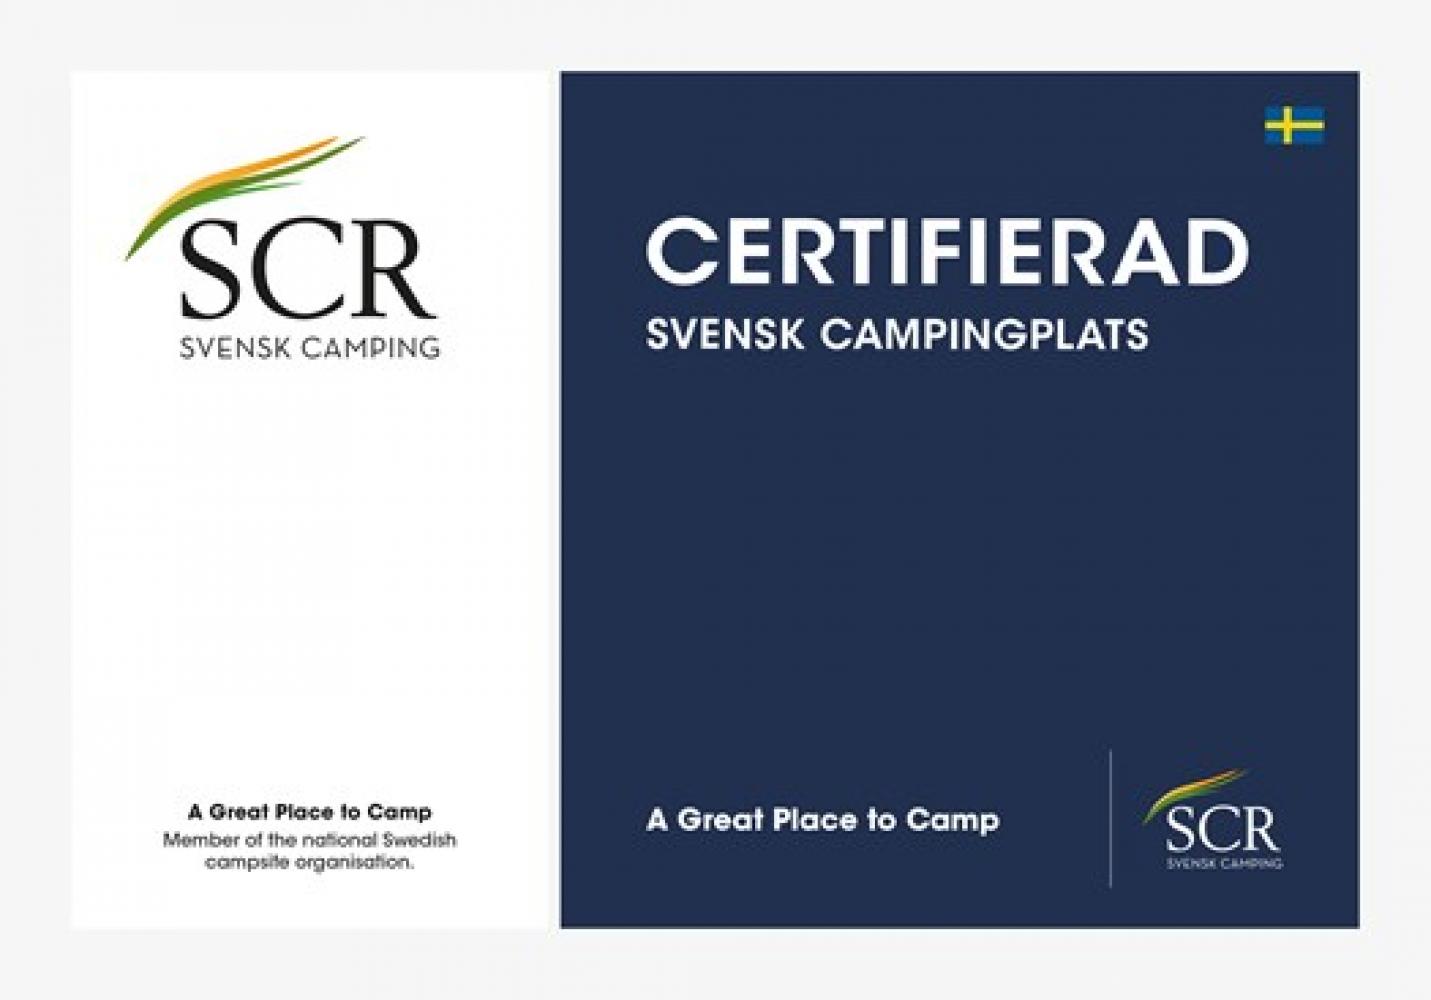 Certifierad camping